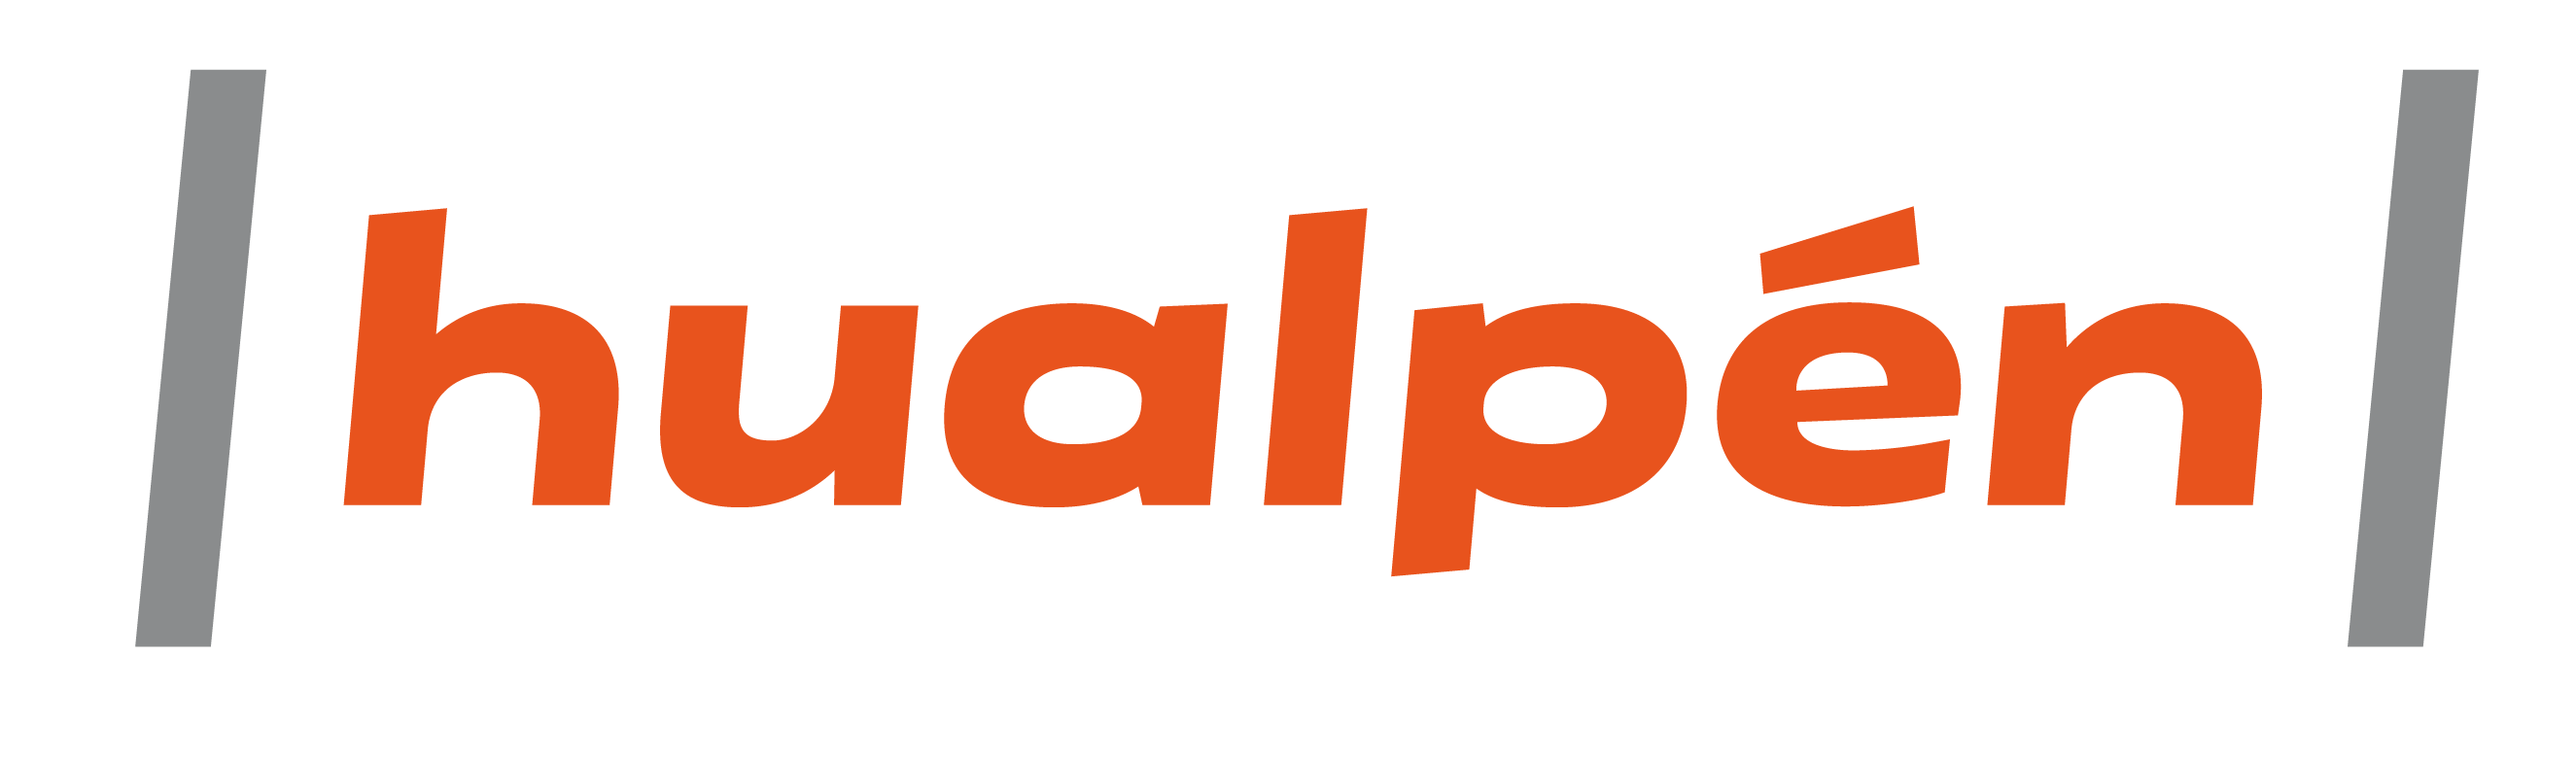 Templateforest Logo